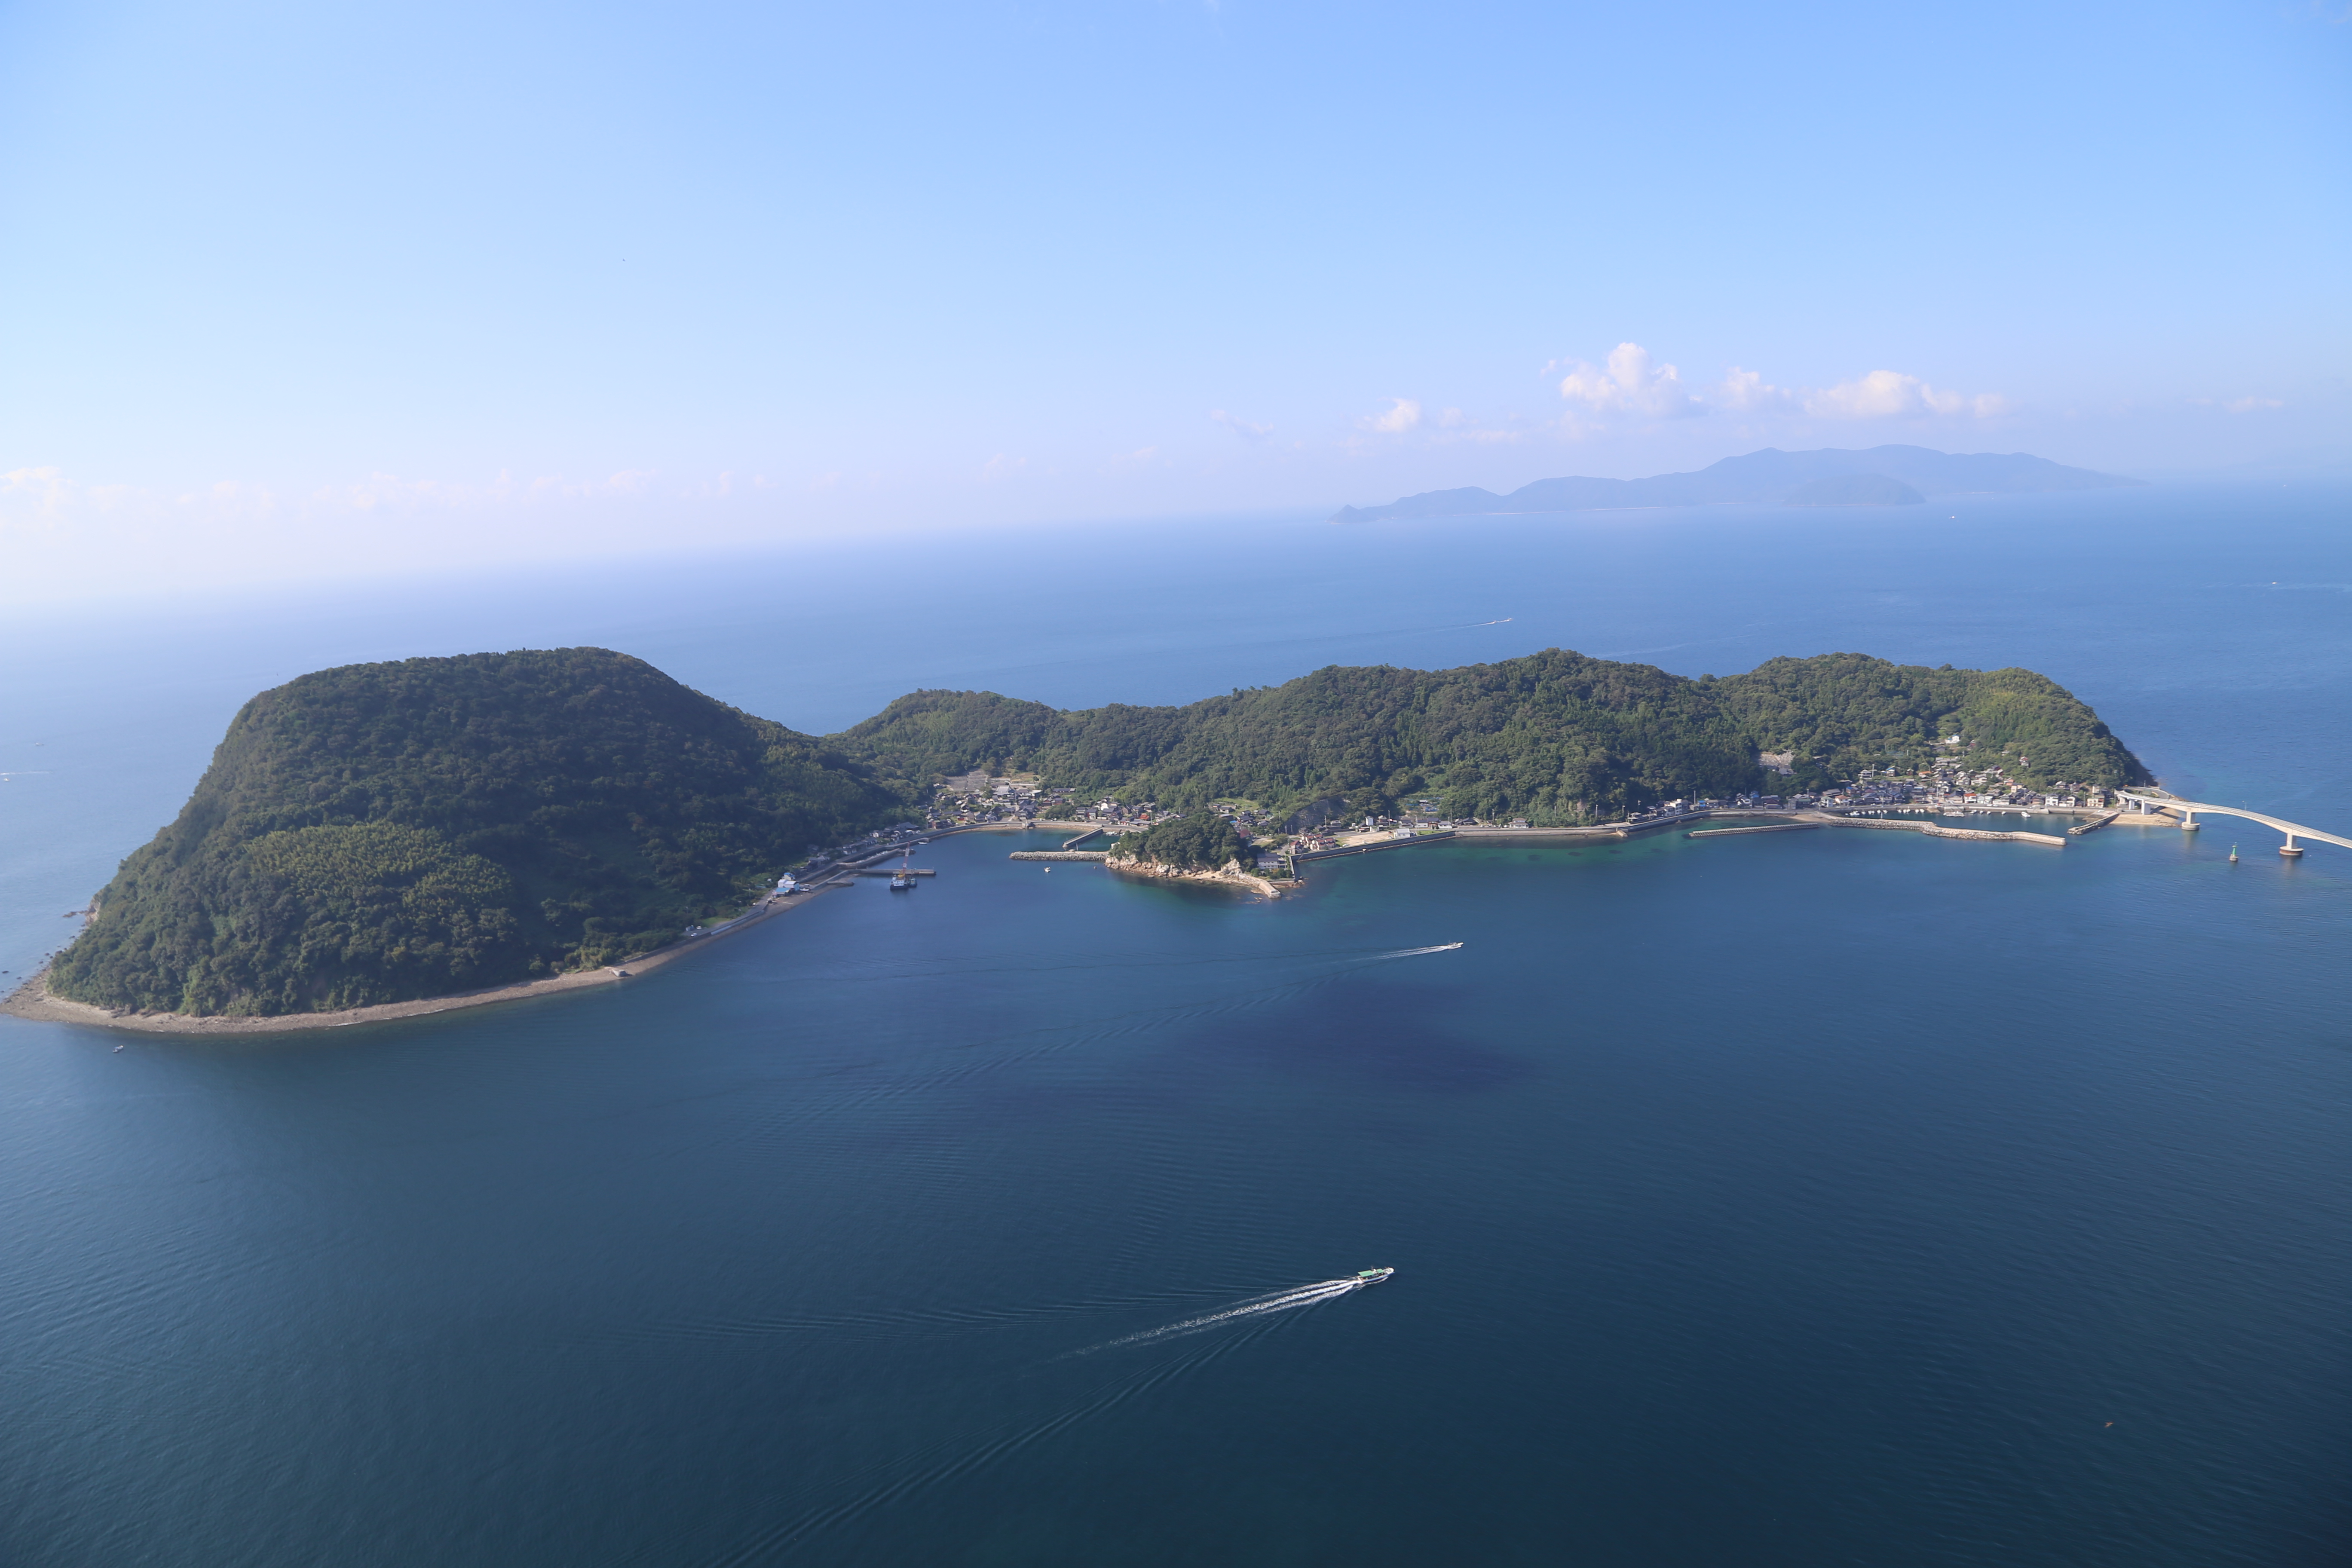 Okikamuro island